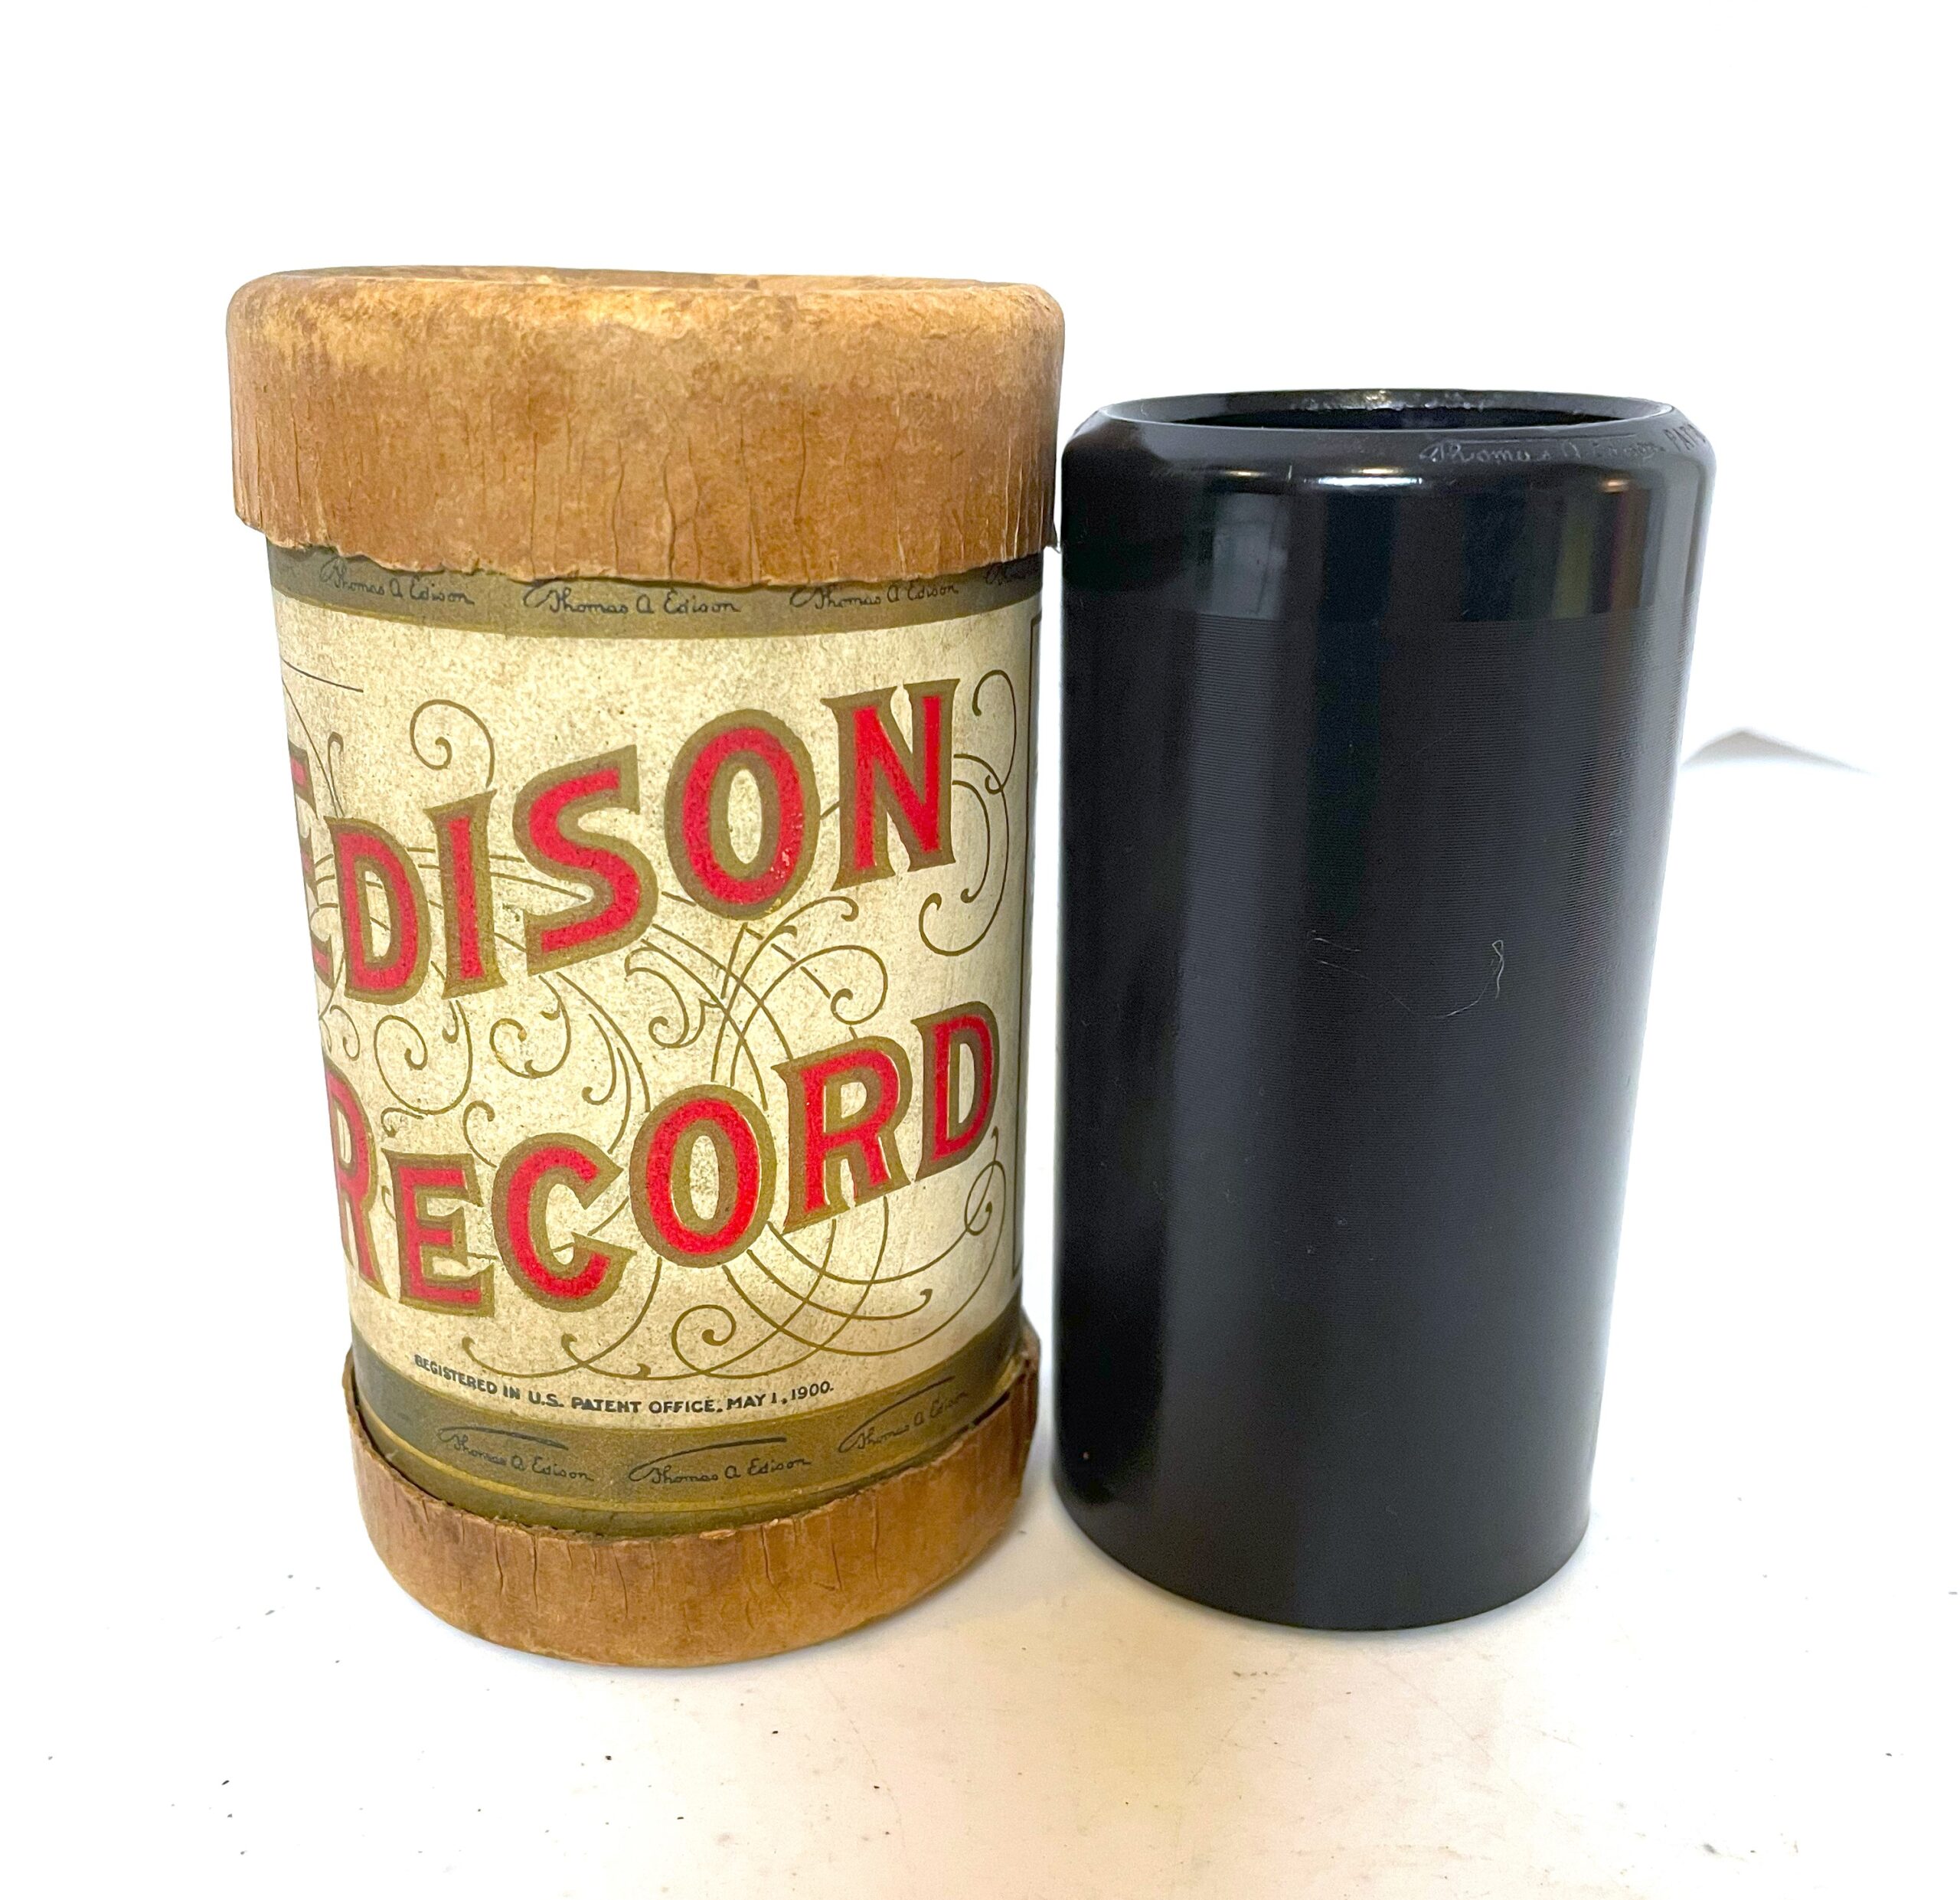 Edison 2-minute Cylinder…” Little Willie“